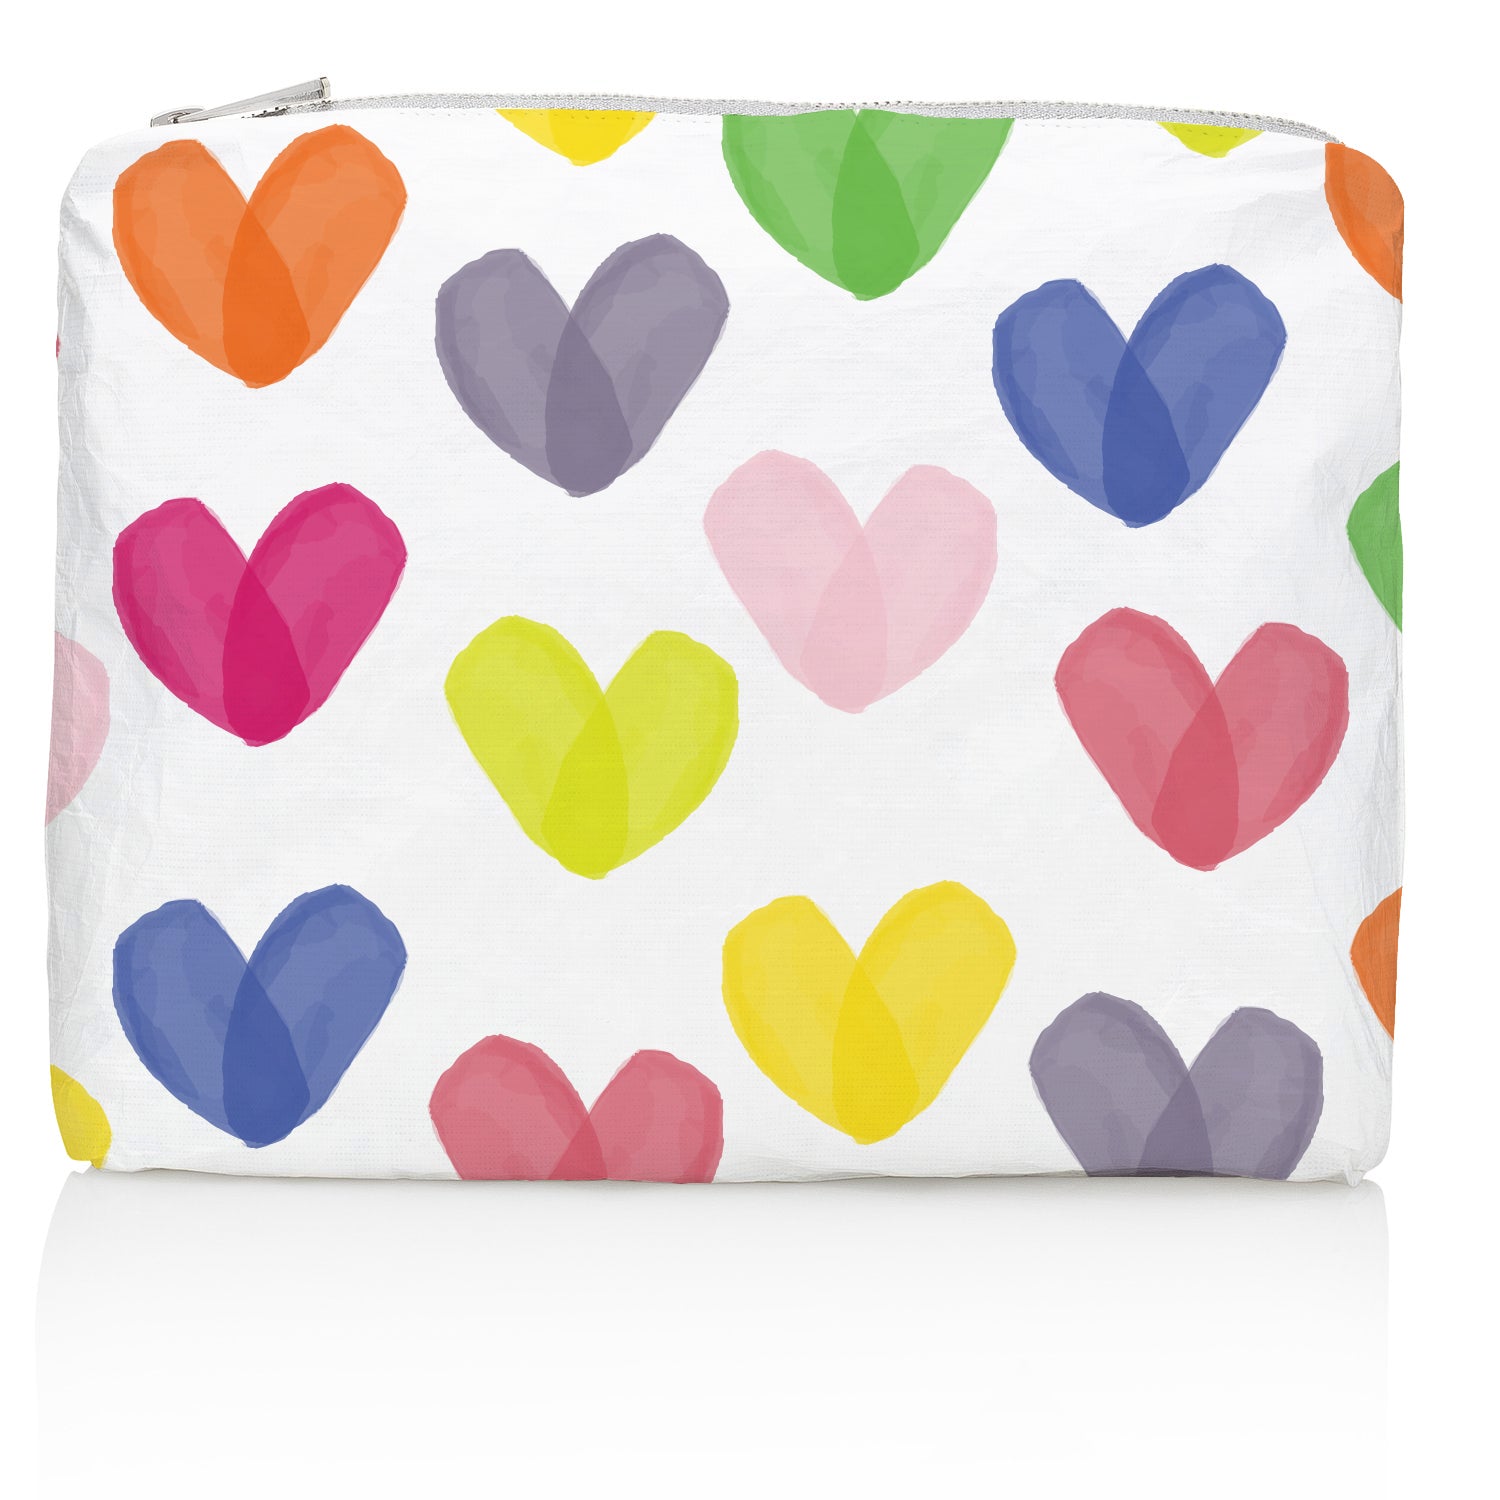 medium zipper pouch in rainbow hearts pattern